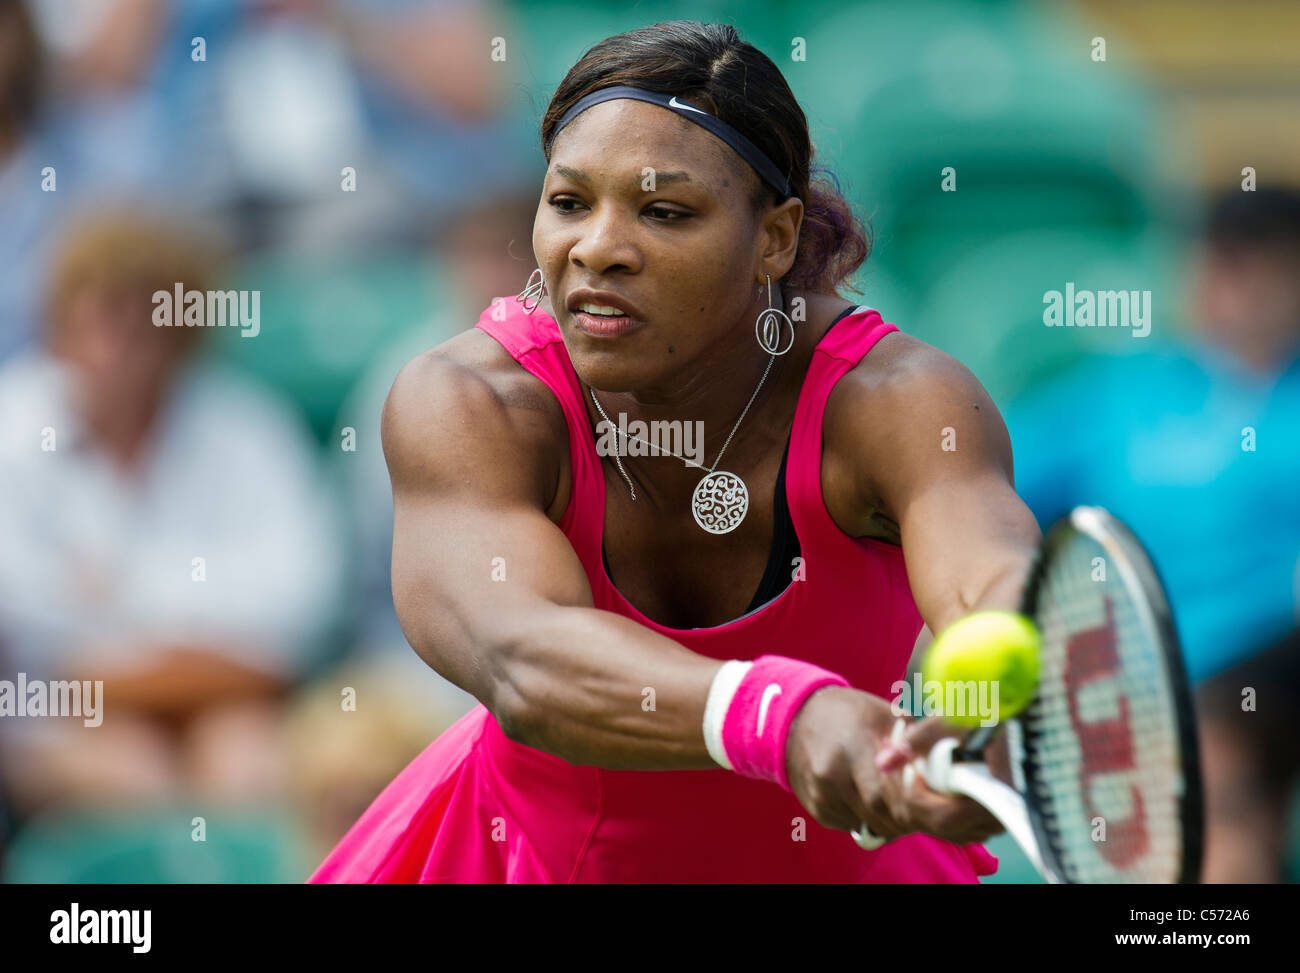 Aegon torneo internacional de tenis 2011, Eastbourne, East Sussex. Serena Williams de Estados Unidos. Foto de stock